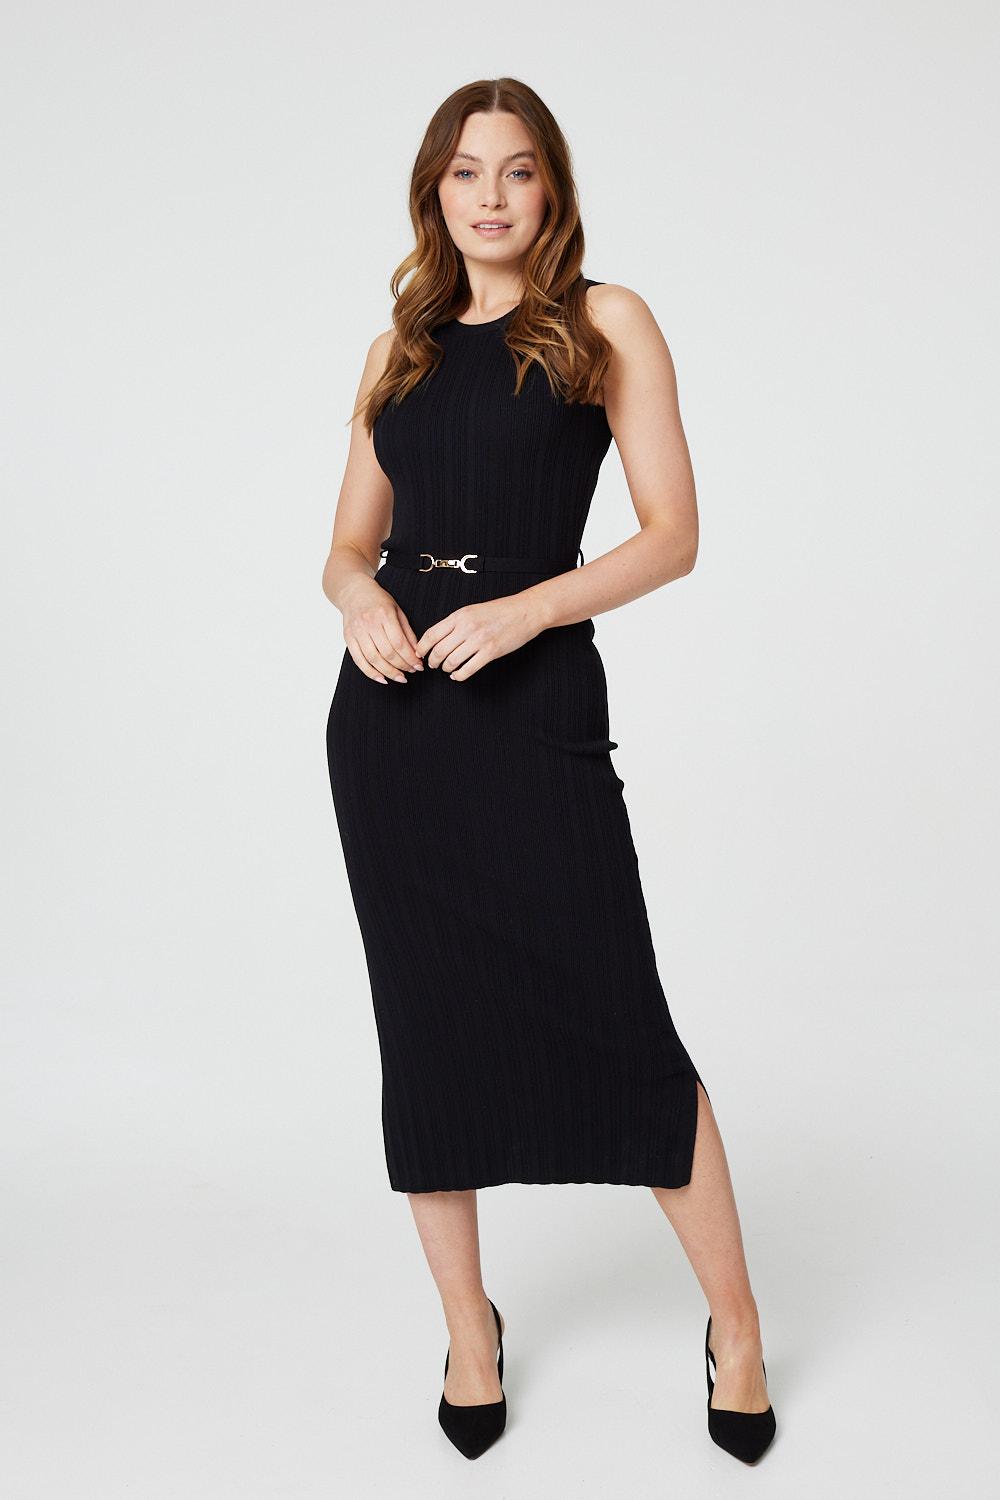 Black | Sleeveless Knit Shift Dress : Model is 5'9"/175 cm and wears UK8/EU36/US4/AUS8